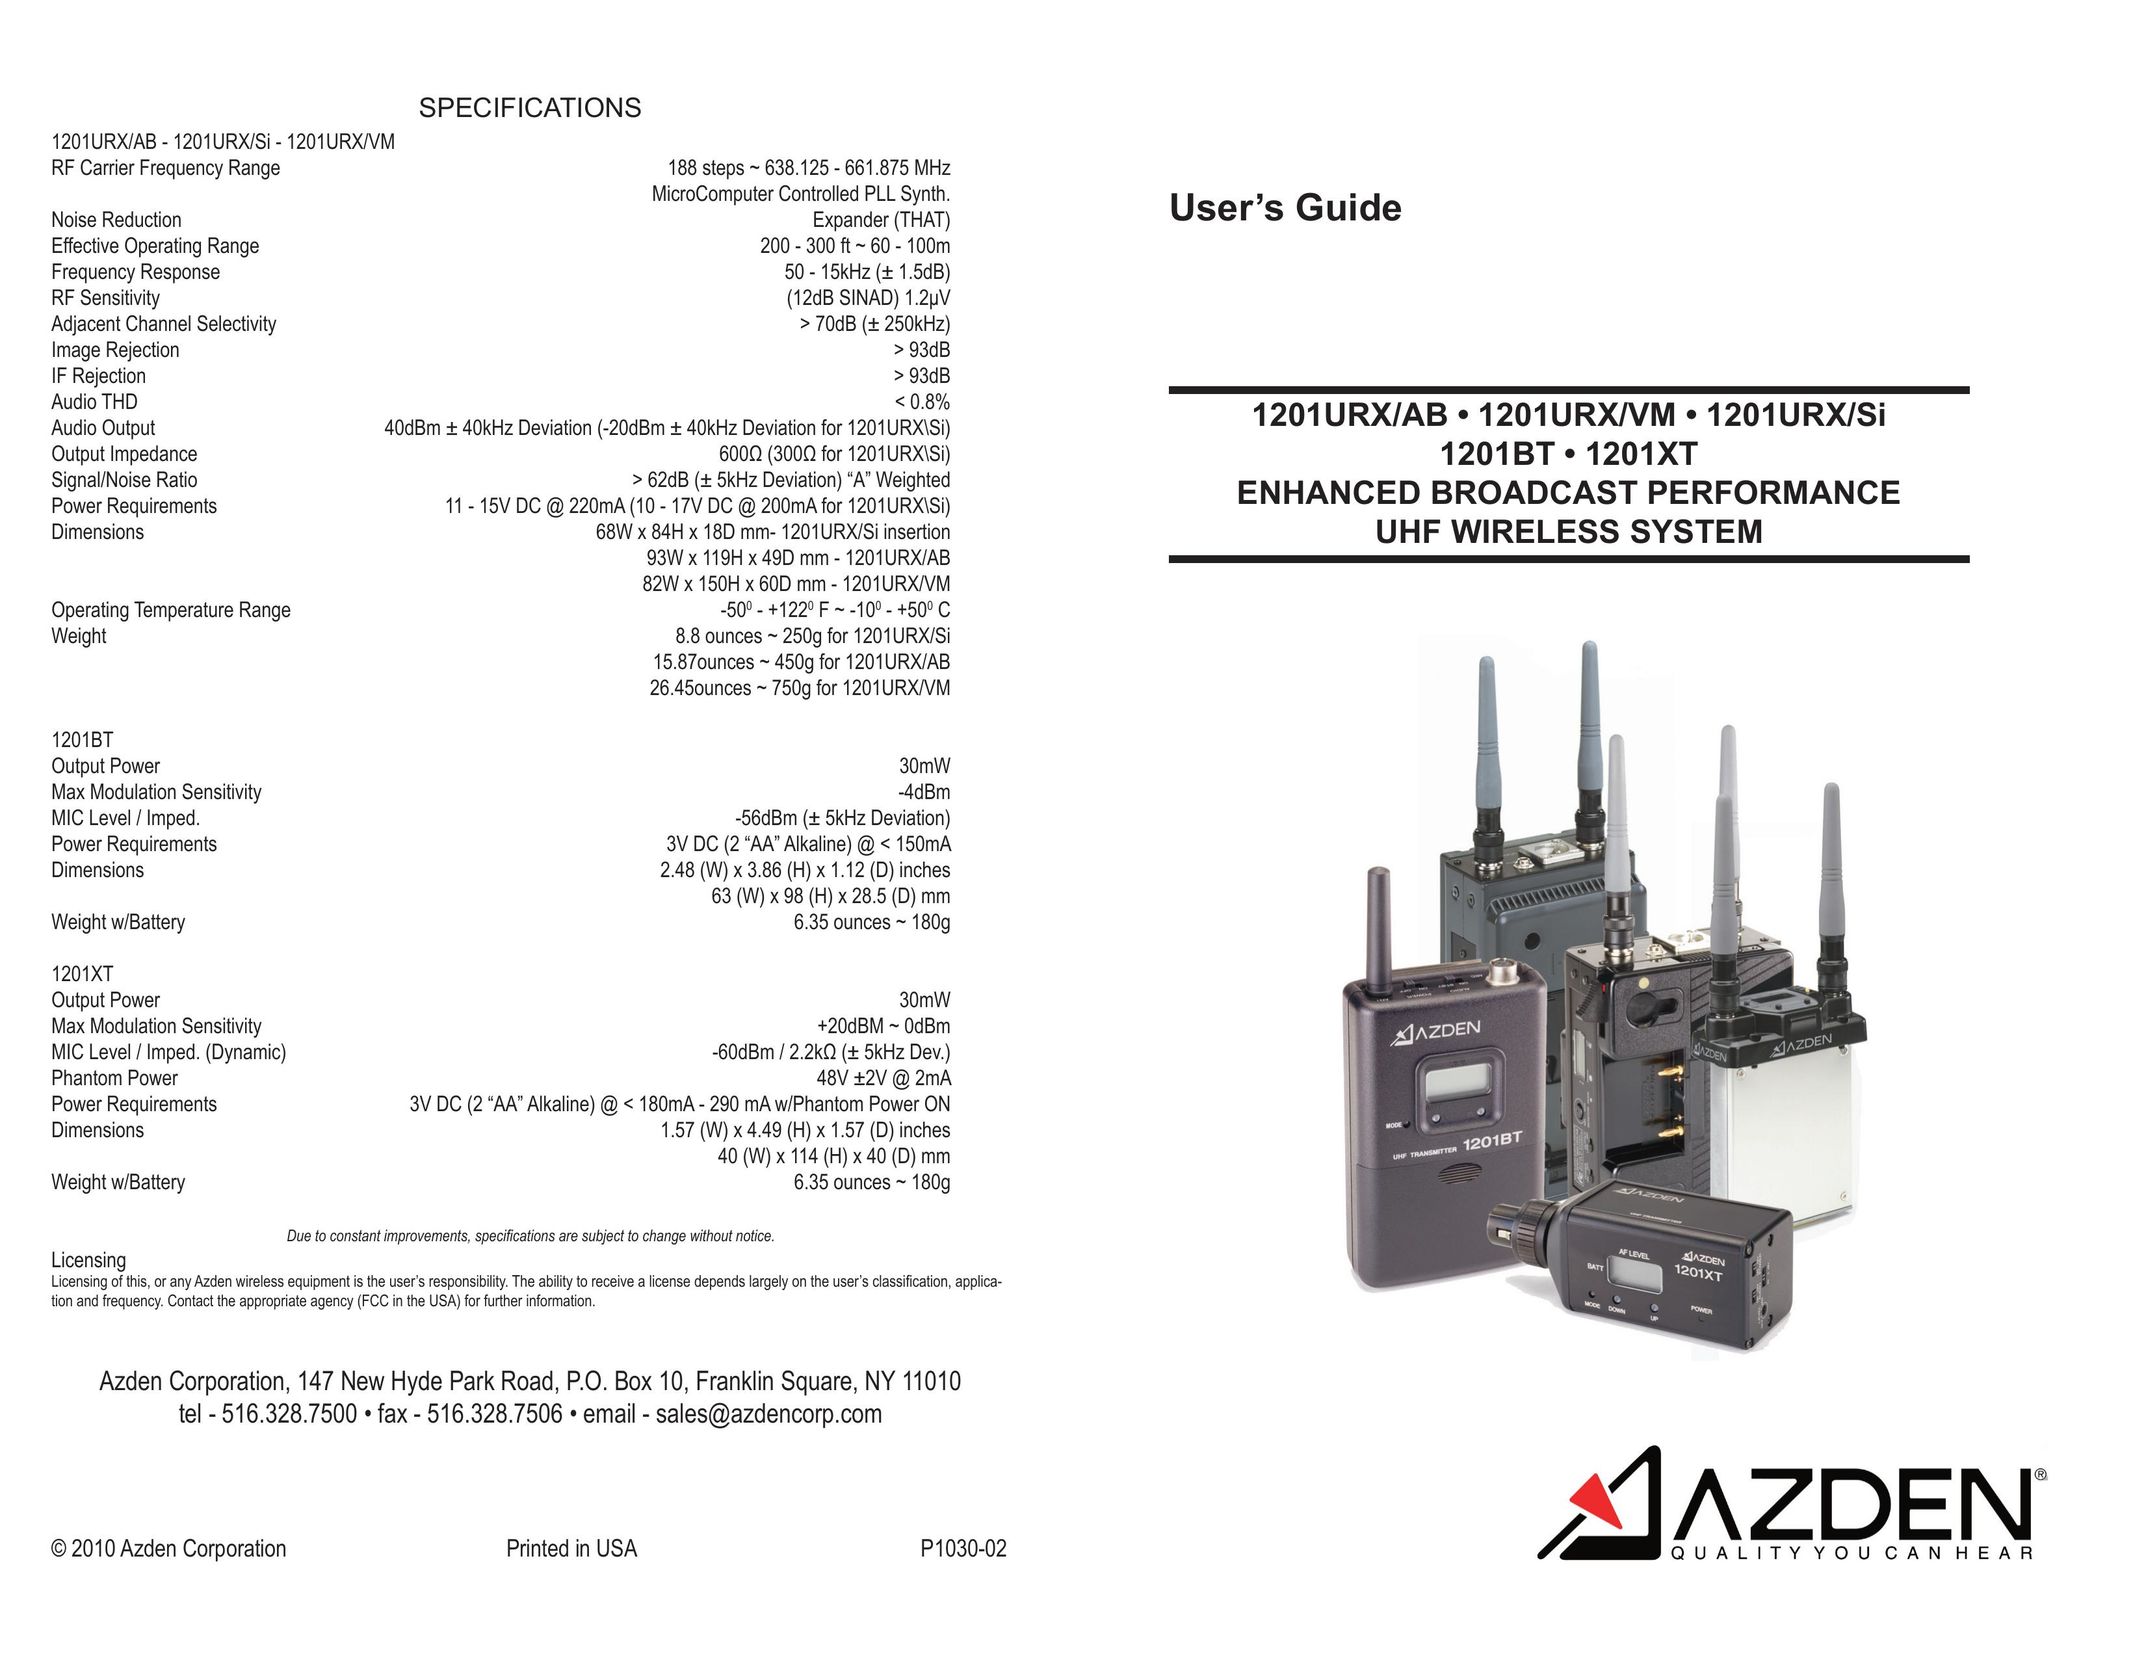 Azden Enhanced Broadcast Performance UHF Wireless System Radio User Manual